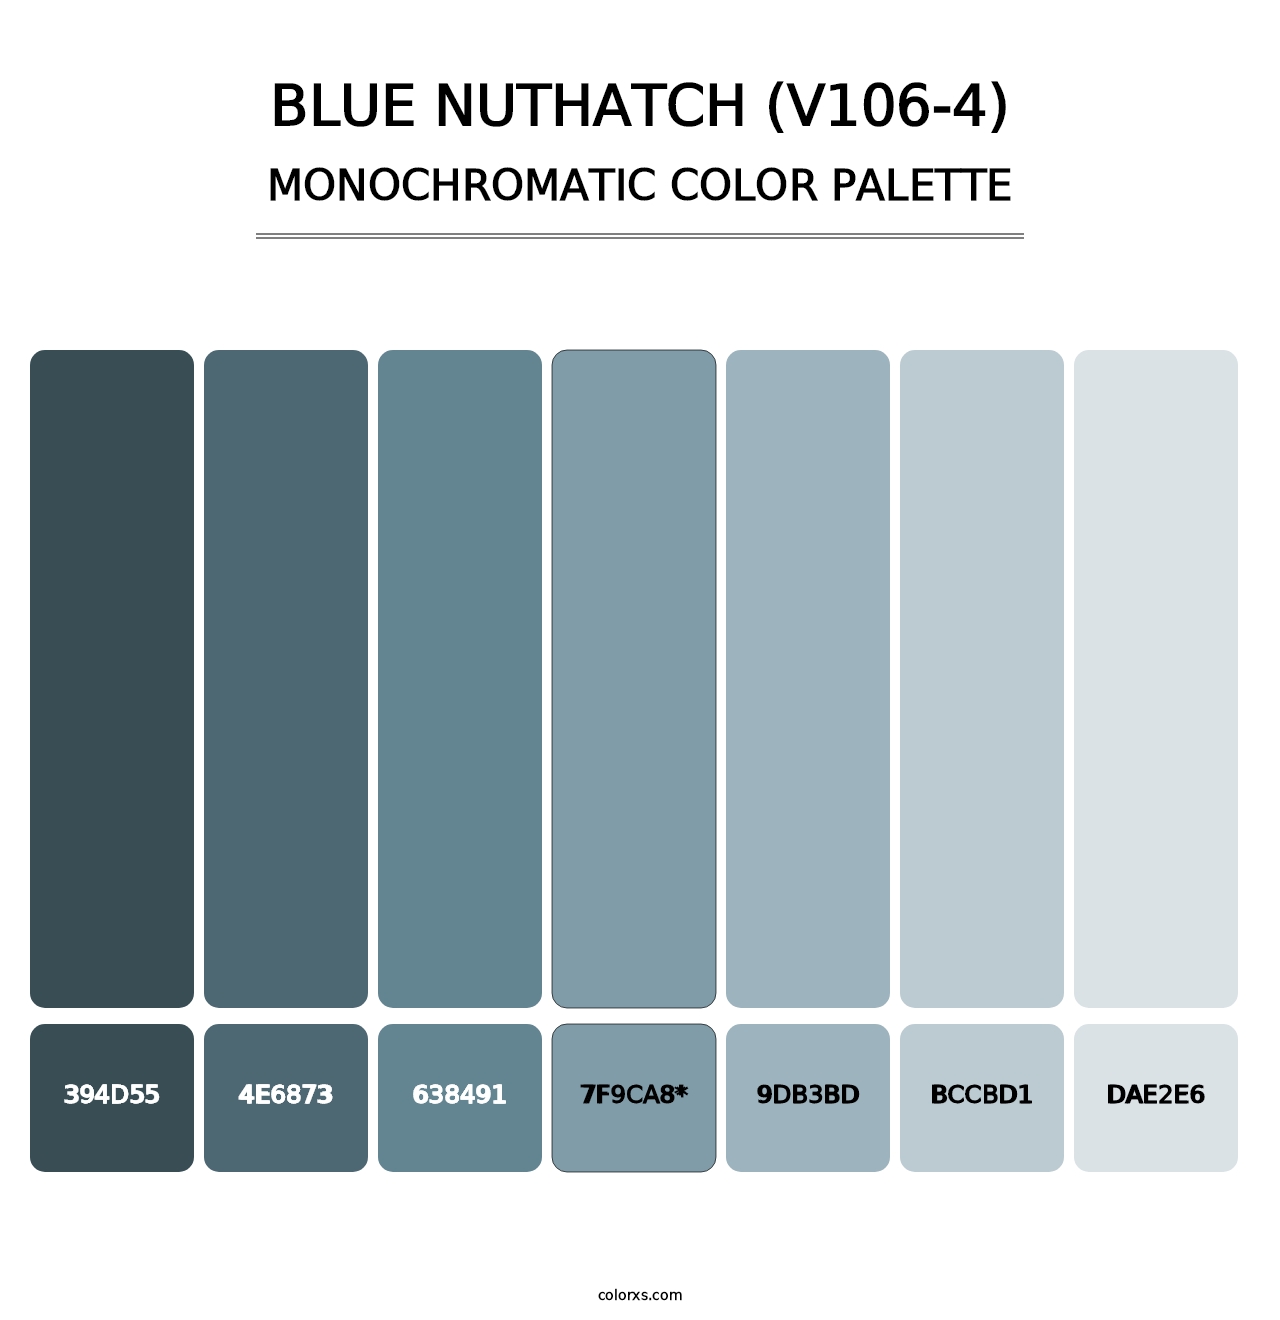 Blue Nuthatch (V106-4) - Monochromatic Color Palette